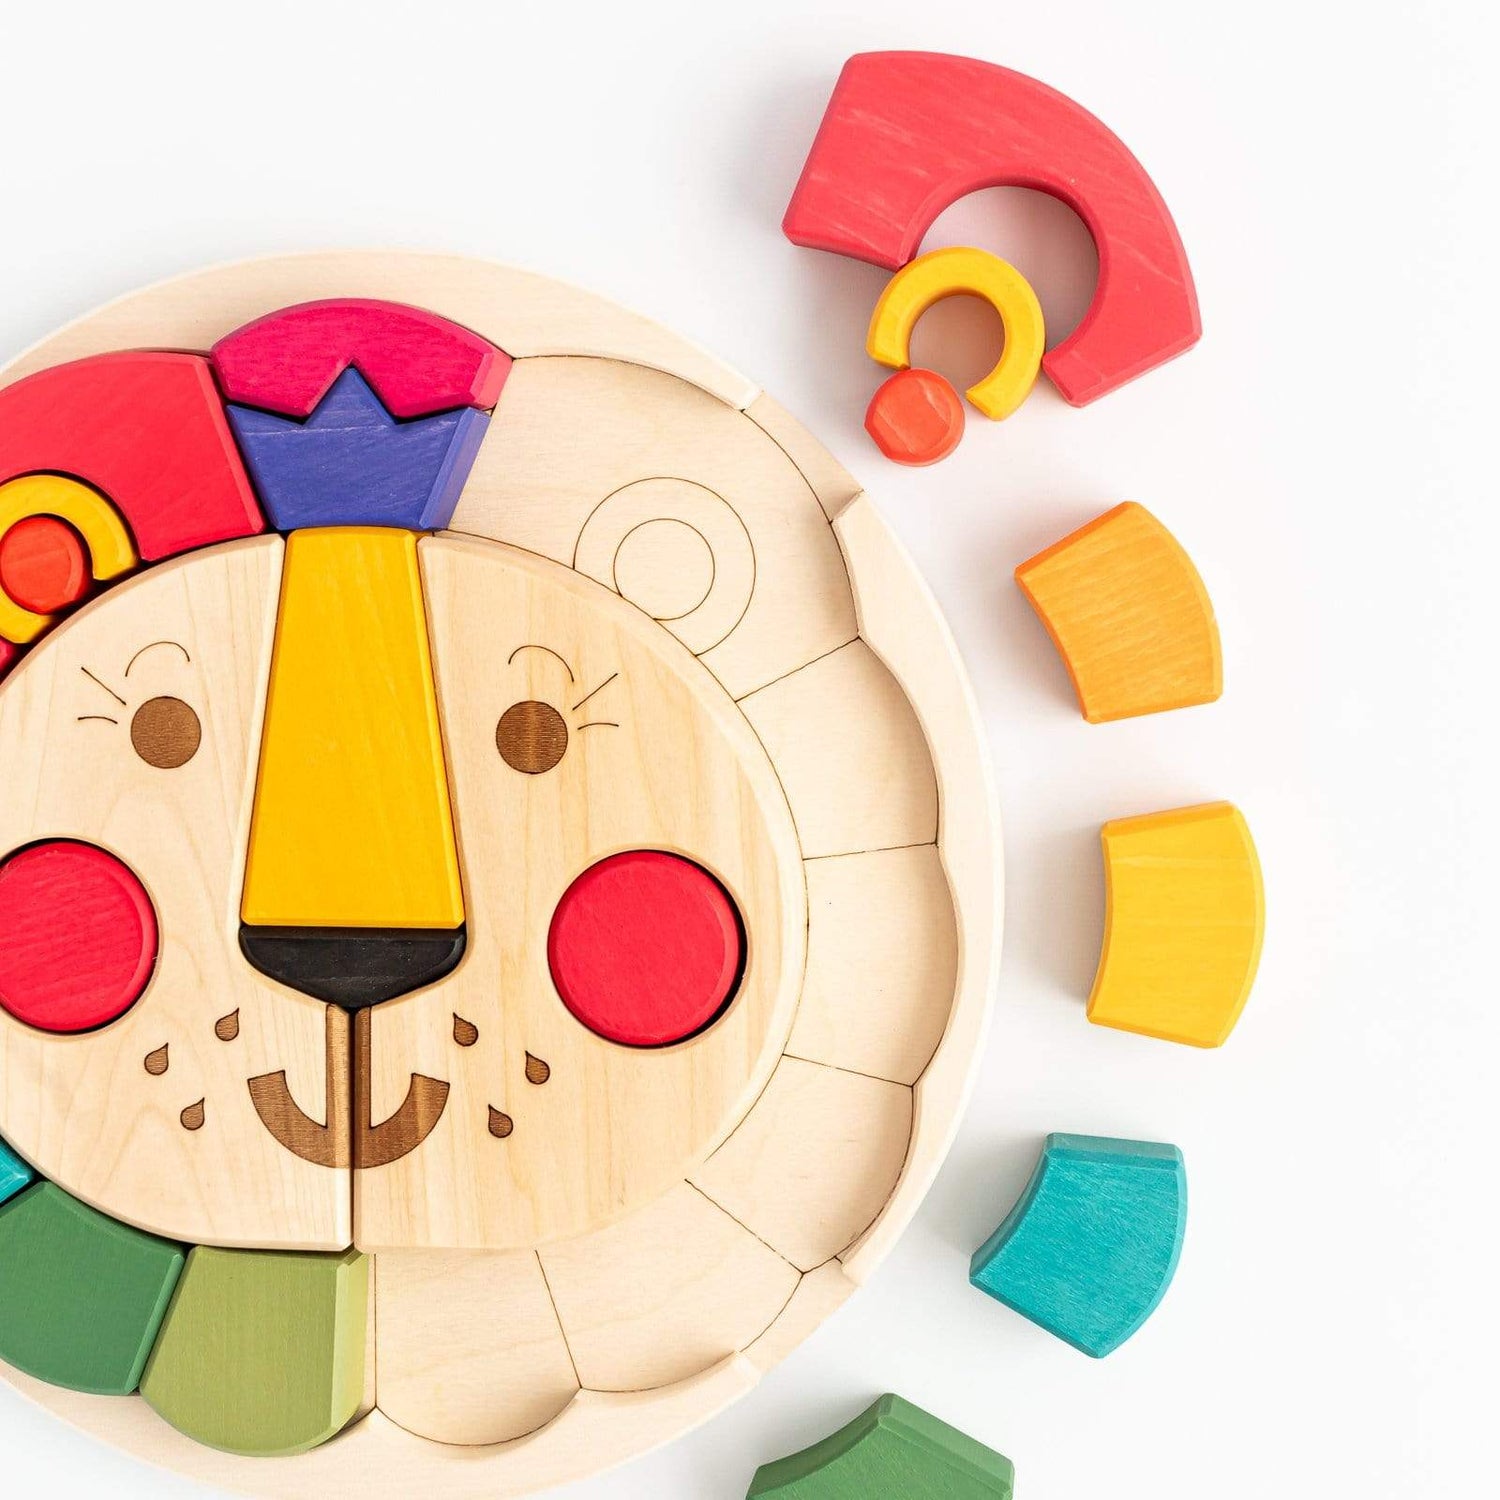 Skandico Puzzle Handmade Wooden Lion Puzzle